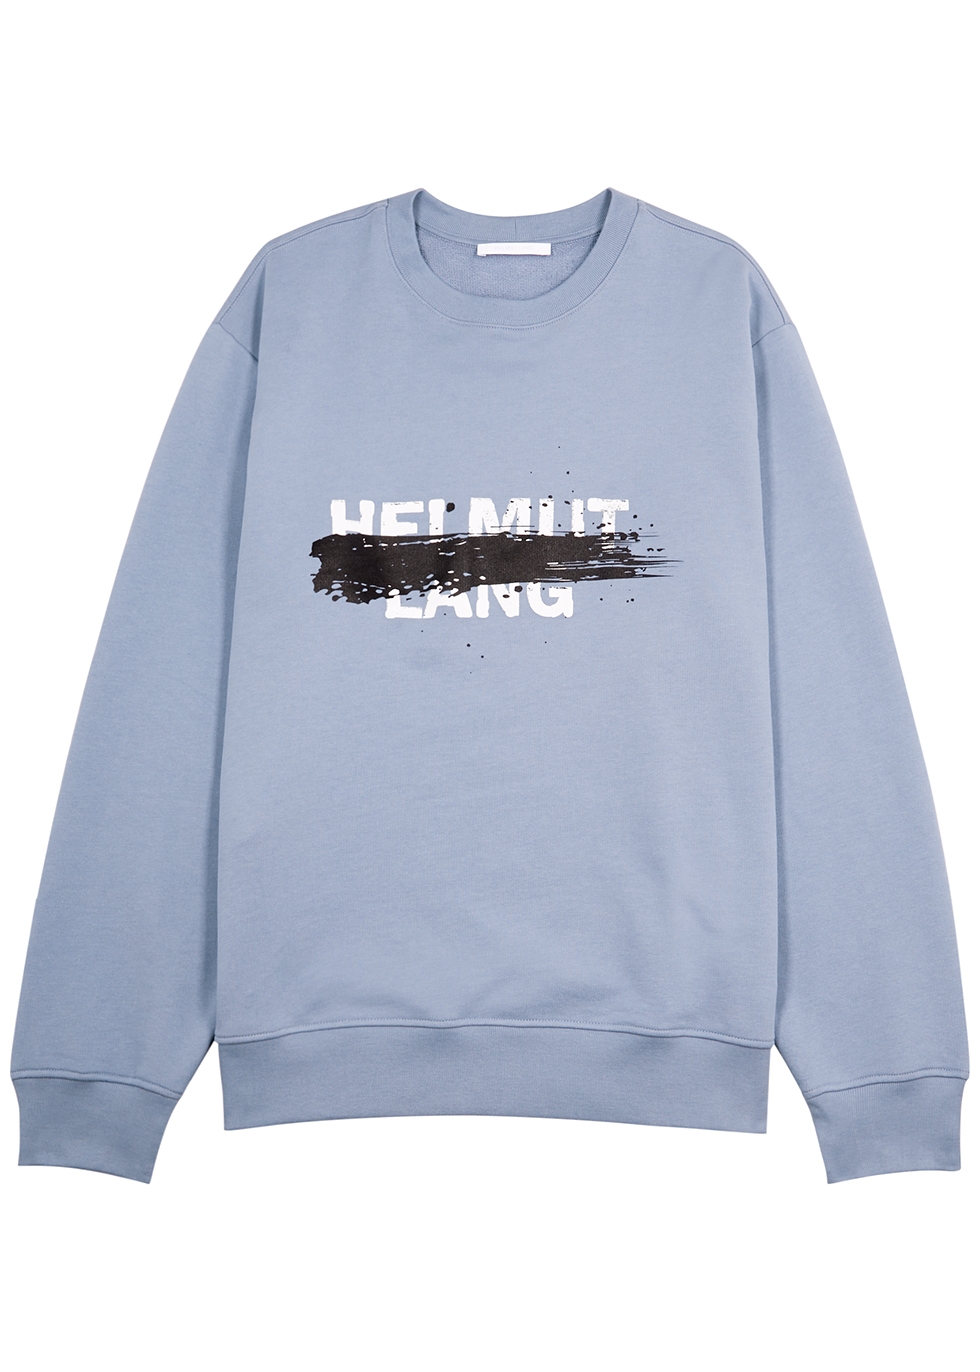 Helmut Lang Stencil blue logo cotton sweatshirt